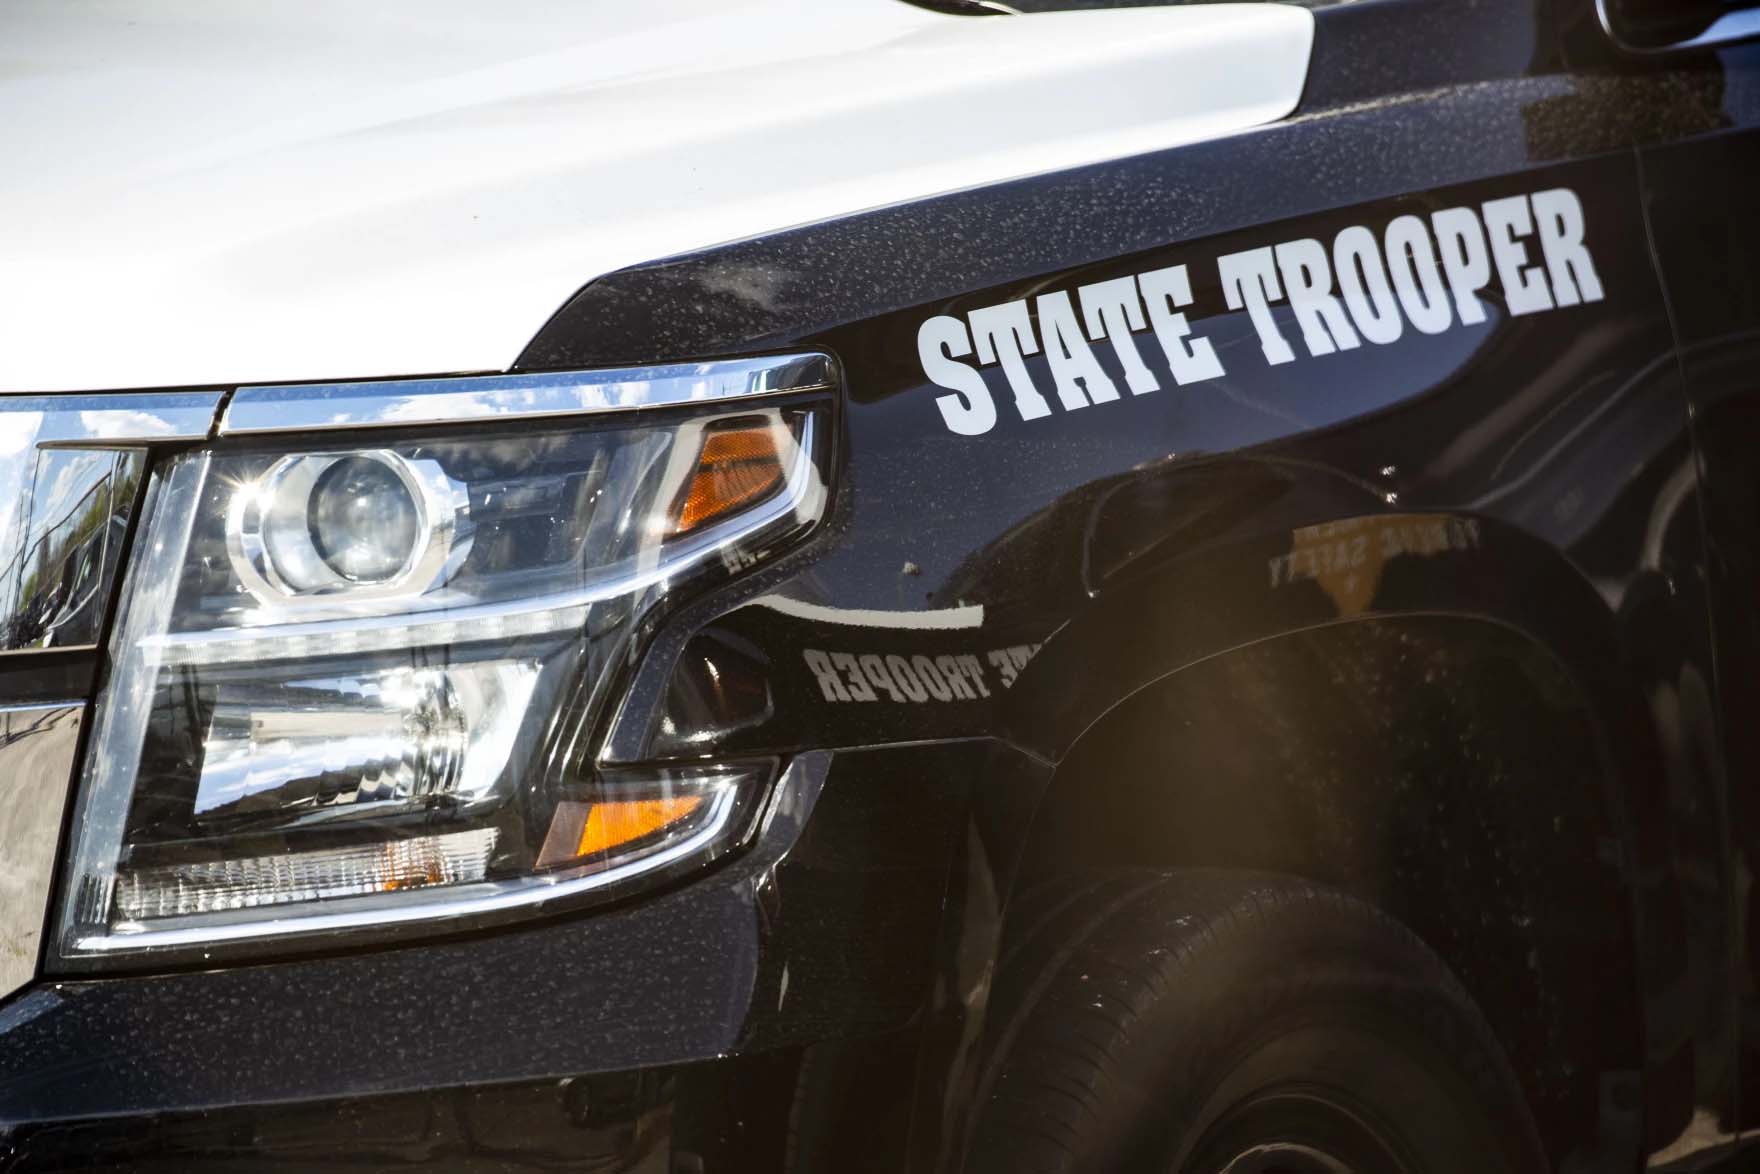 texas rangers law enforcement vehicles